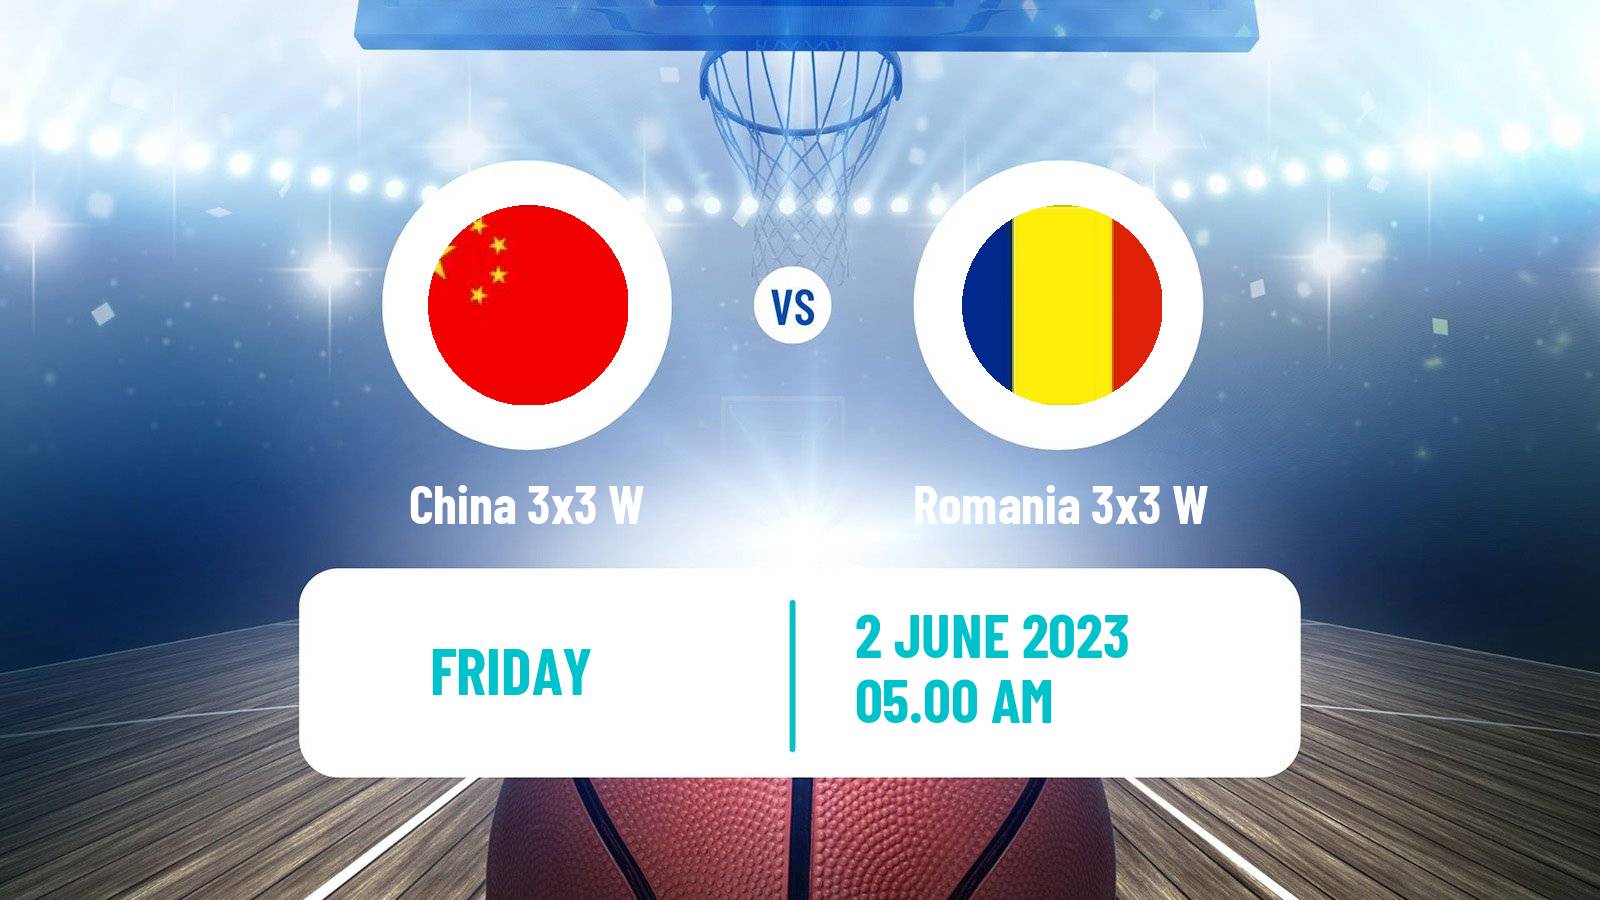 Basketball World Cup Basketball 3x3 Women China 3x3 W - Romania 3x3 W